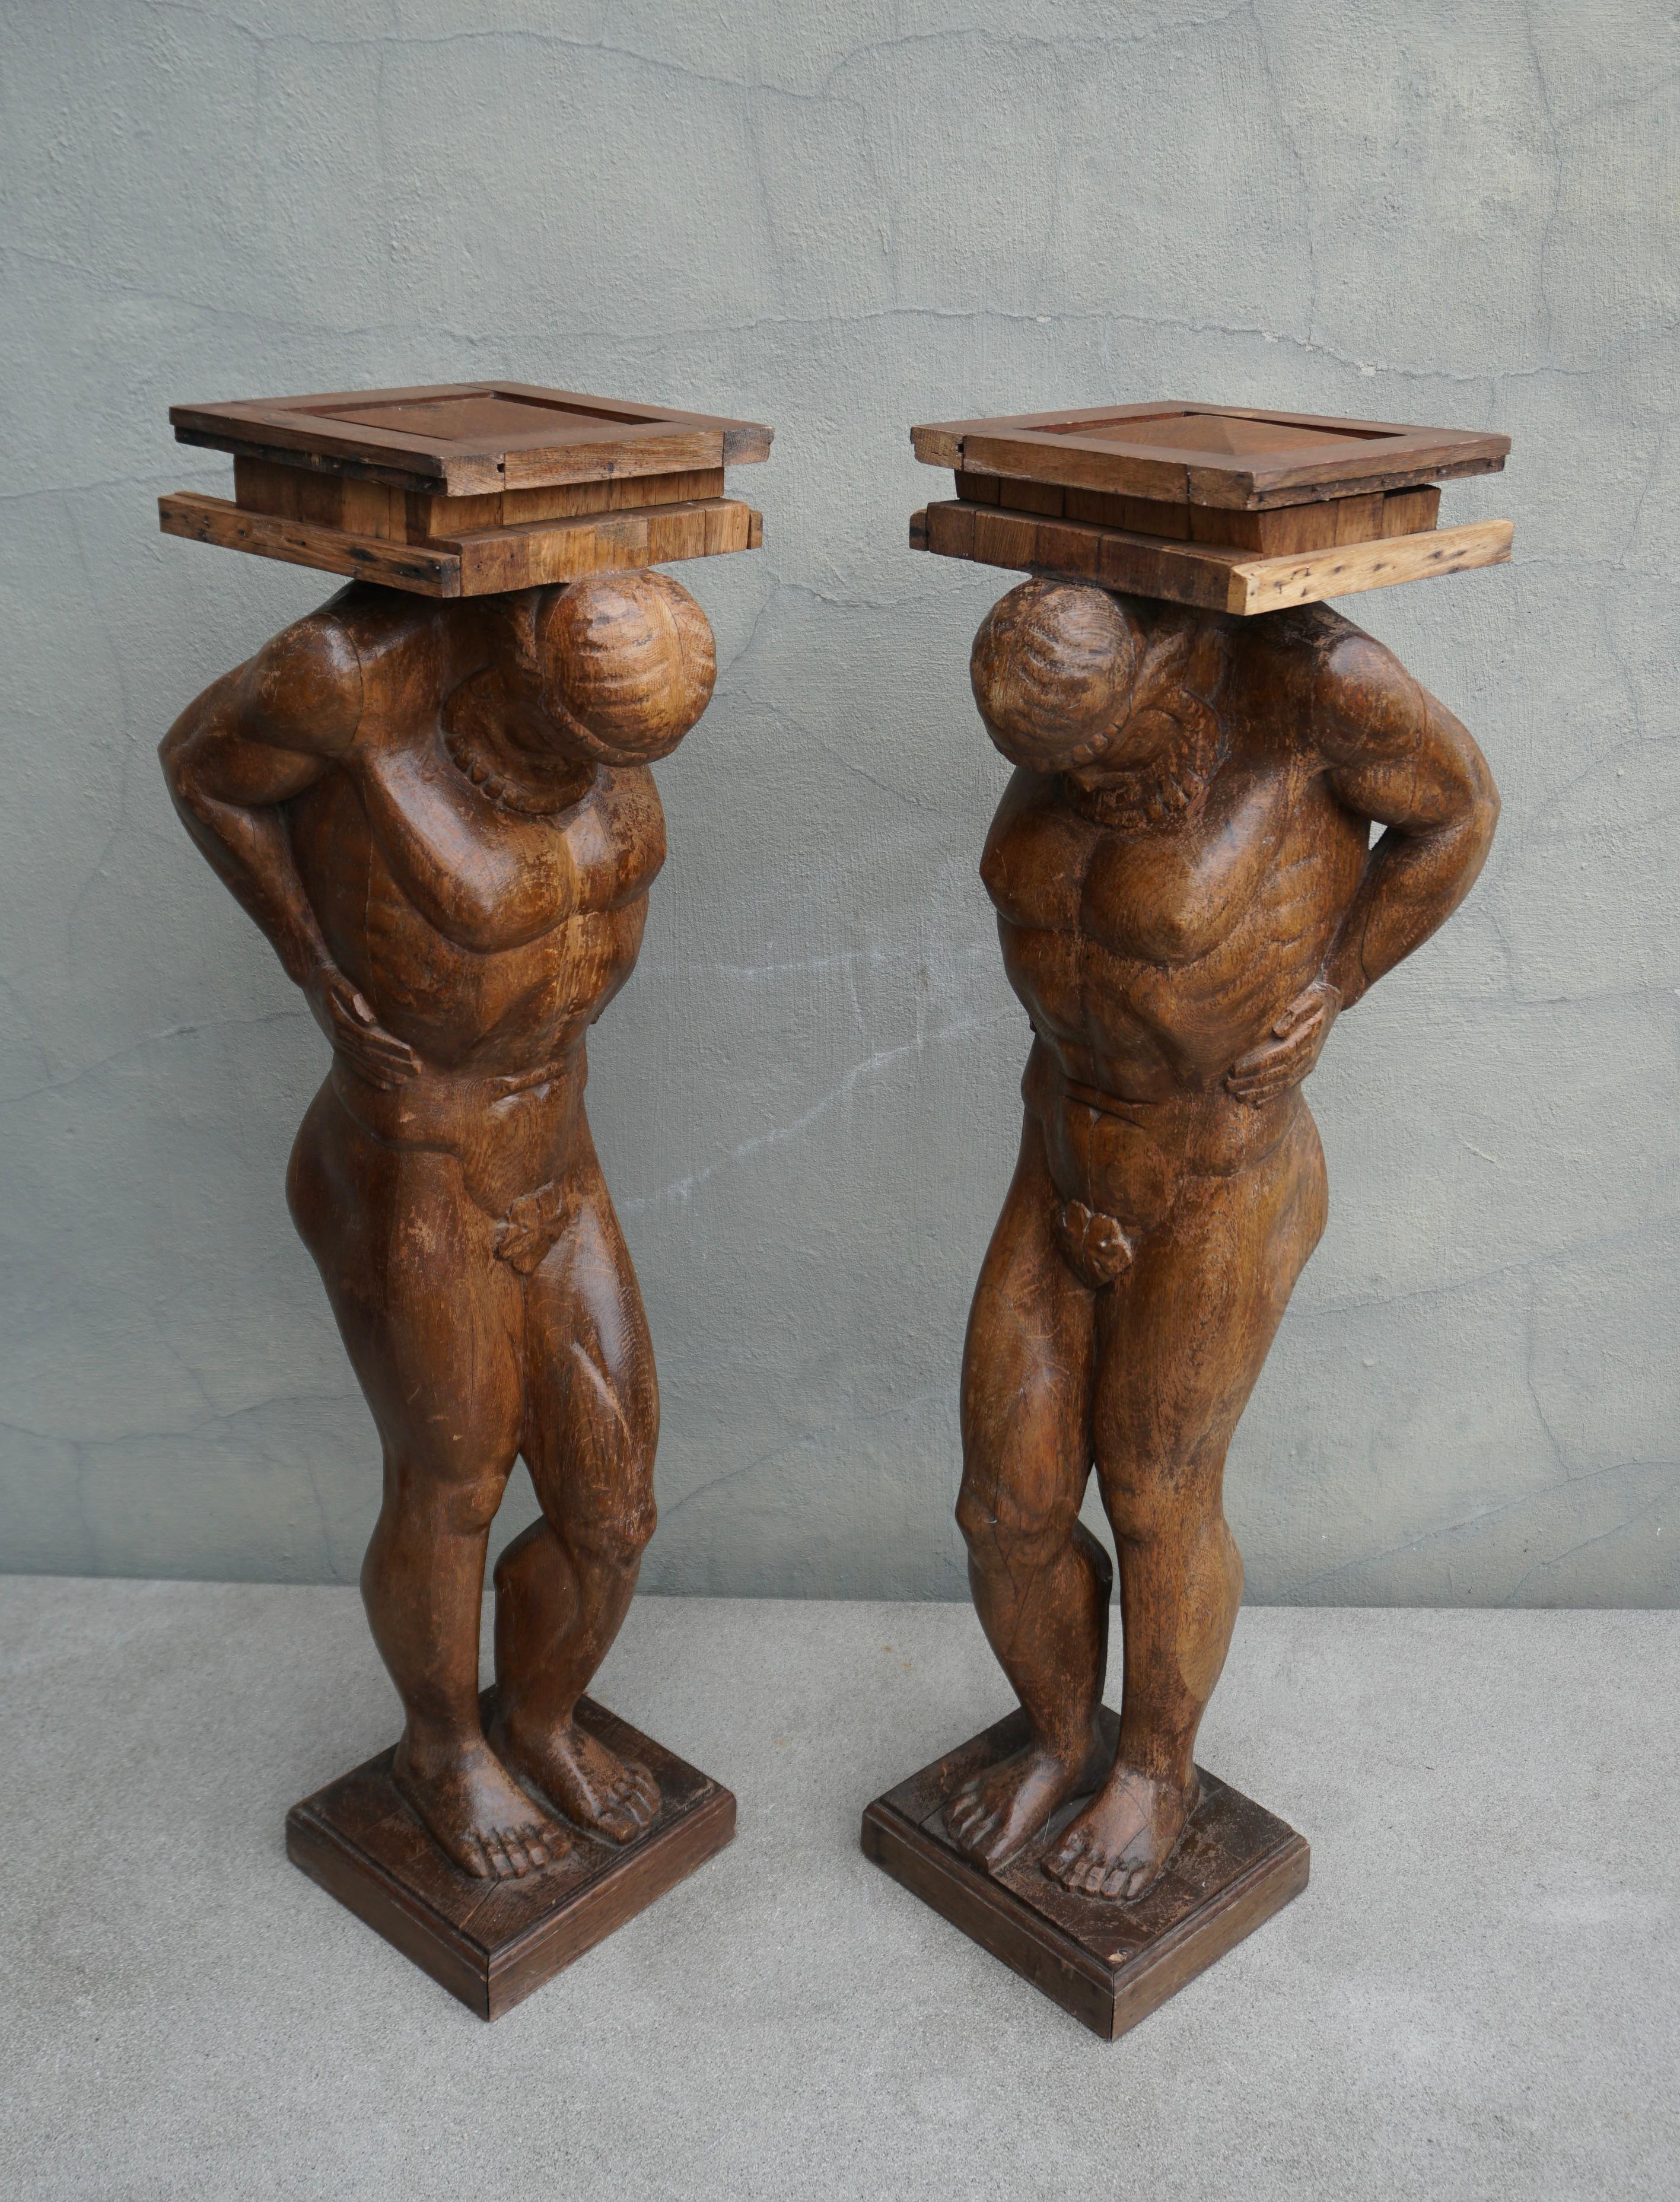 Italian Pair Monumental Figural Supports Columns Sculptures Representing Atlas Hercules For Sale